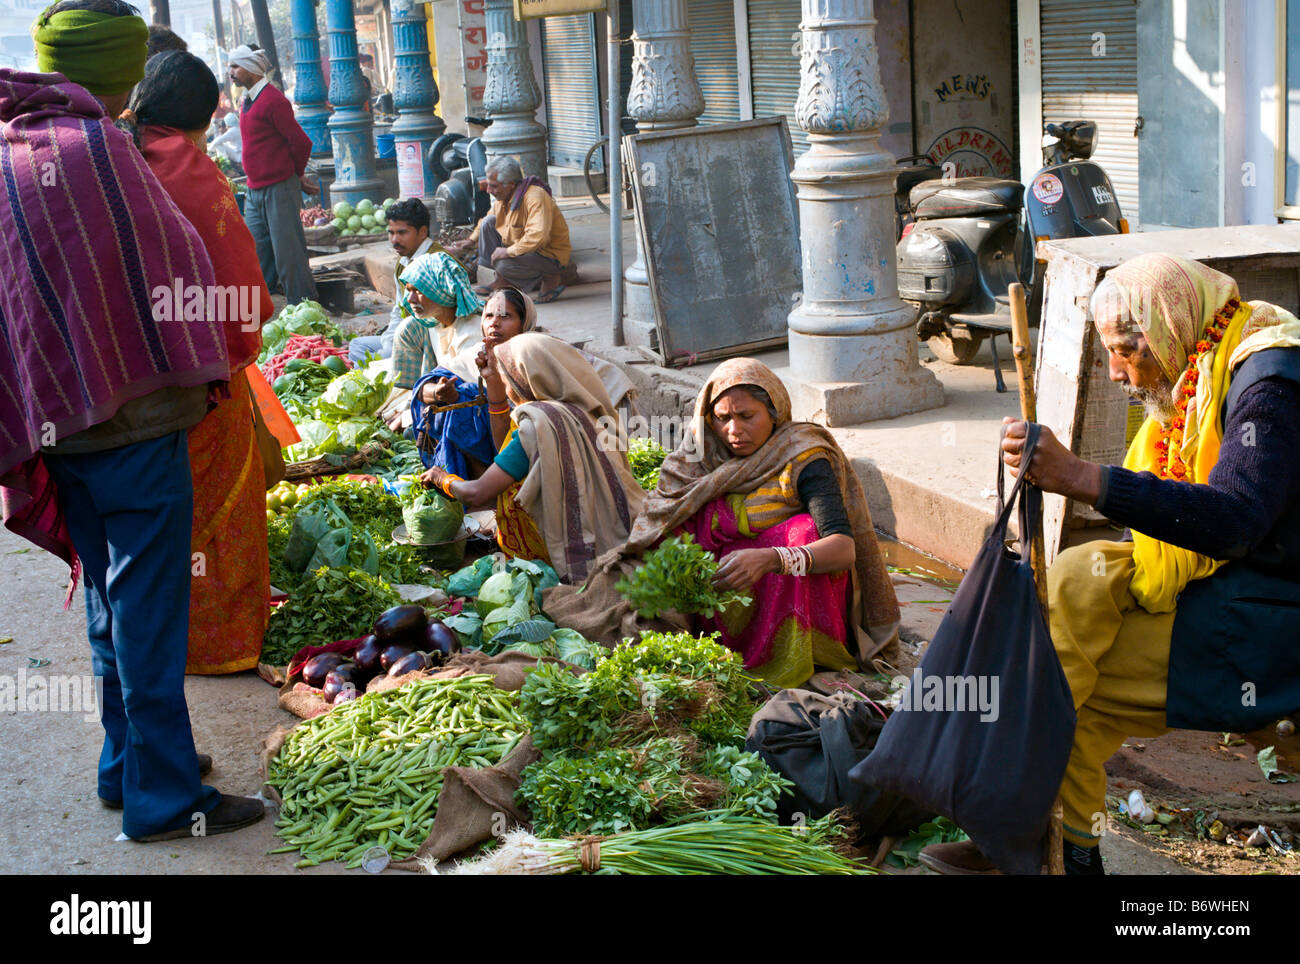 INDIA VARANASI Indian women in colorful saris selling beautiful vegetables on the street in Varanasi as an elderly Sadu waits Stock Photo